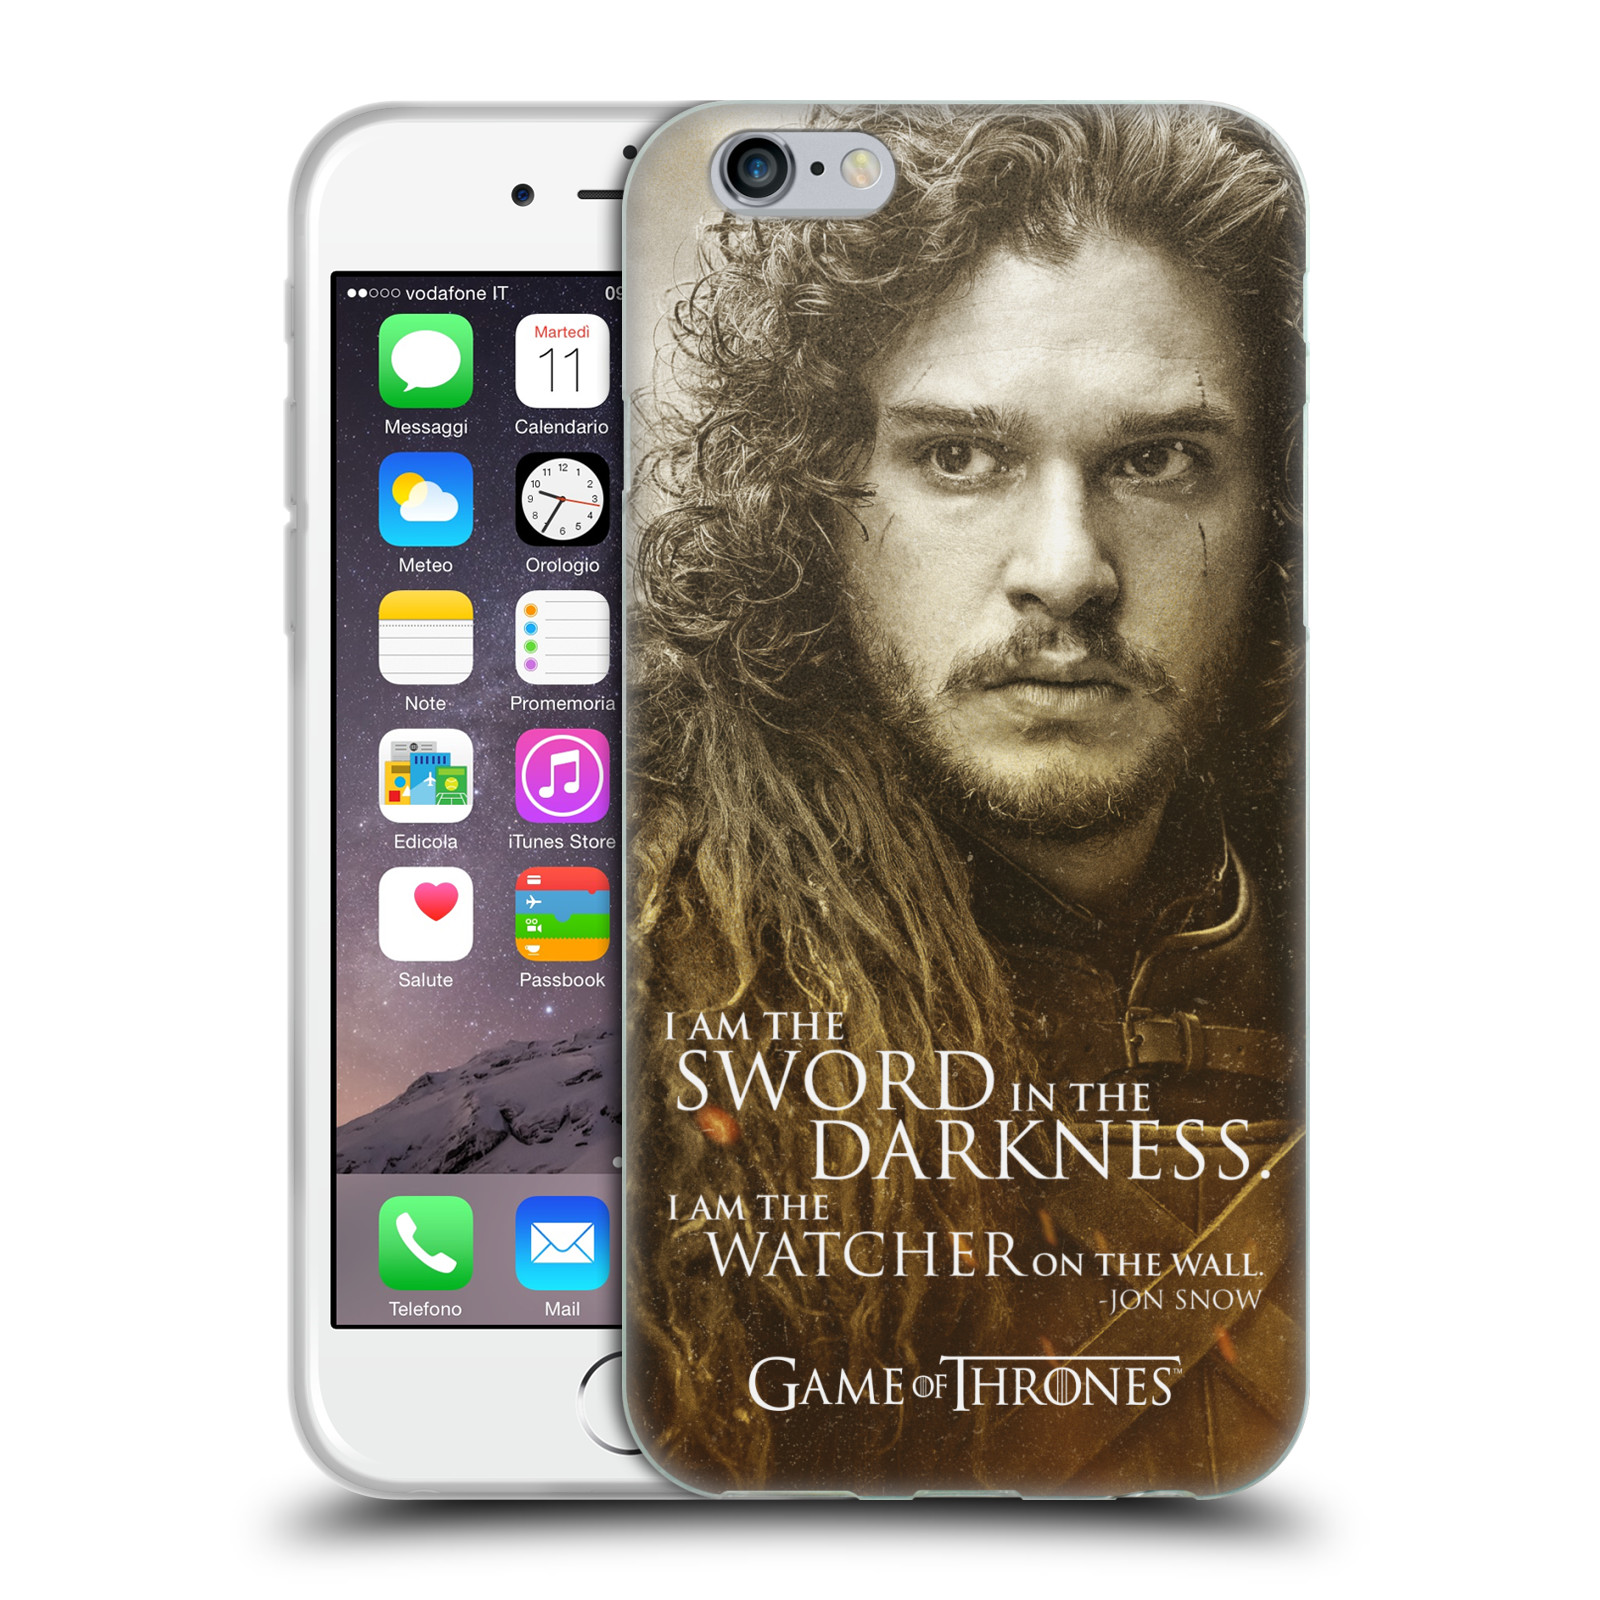 Silikonové pouzdro na mobil Apple iPhone 6 HEAD CASE Hra o trůny - Jon Snow (Silikonový kryt či obal na mobilní telefon s licencovaným motivem Hra o trůny - Game Of Thrones pro Apple iPhone 6)